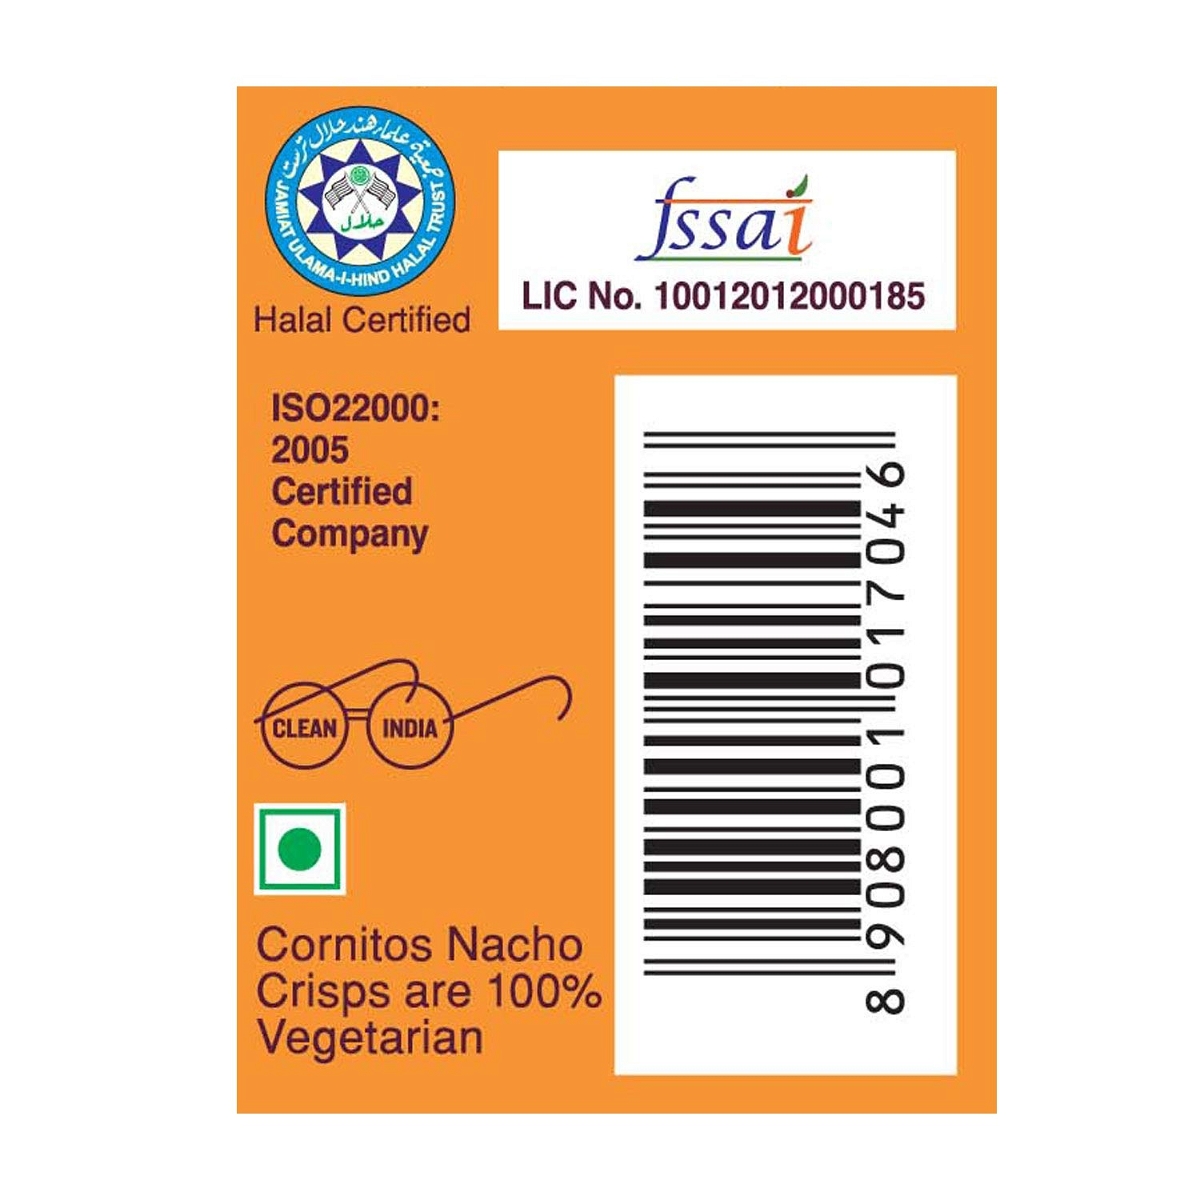 Cornitos Nacho Crisps - Cheese & Herbs: 60 Gm